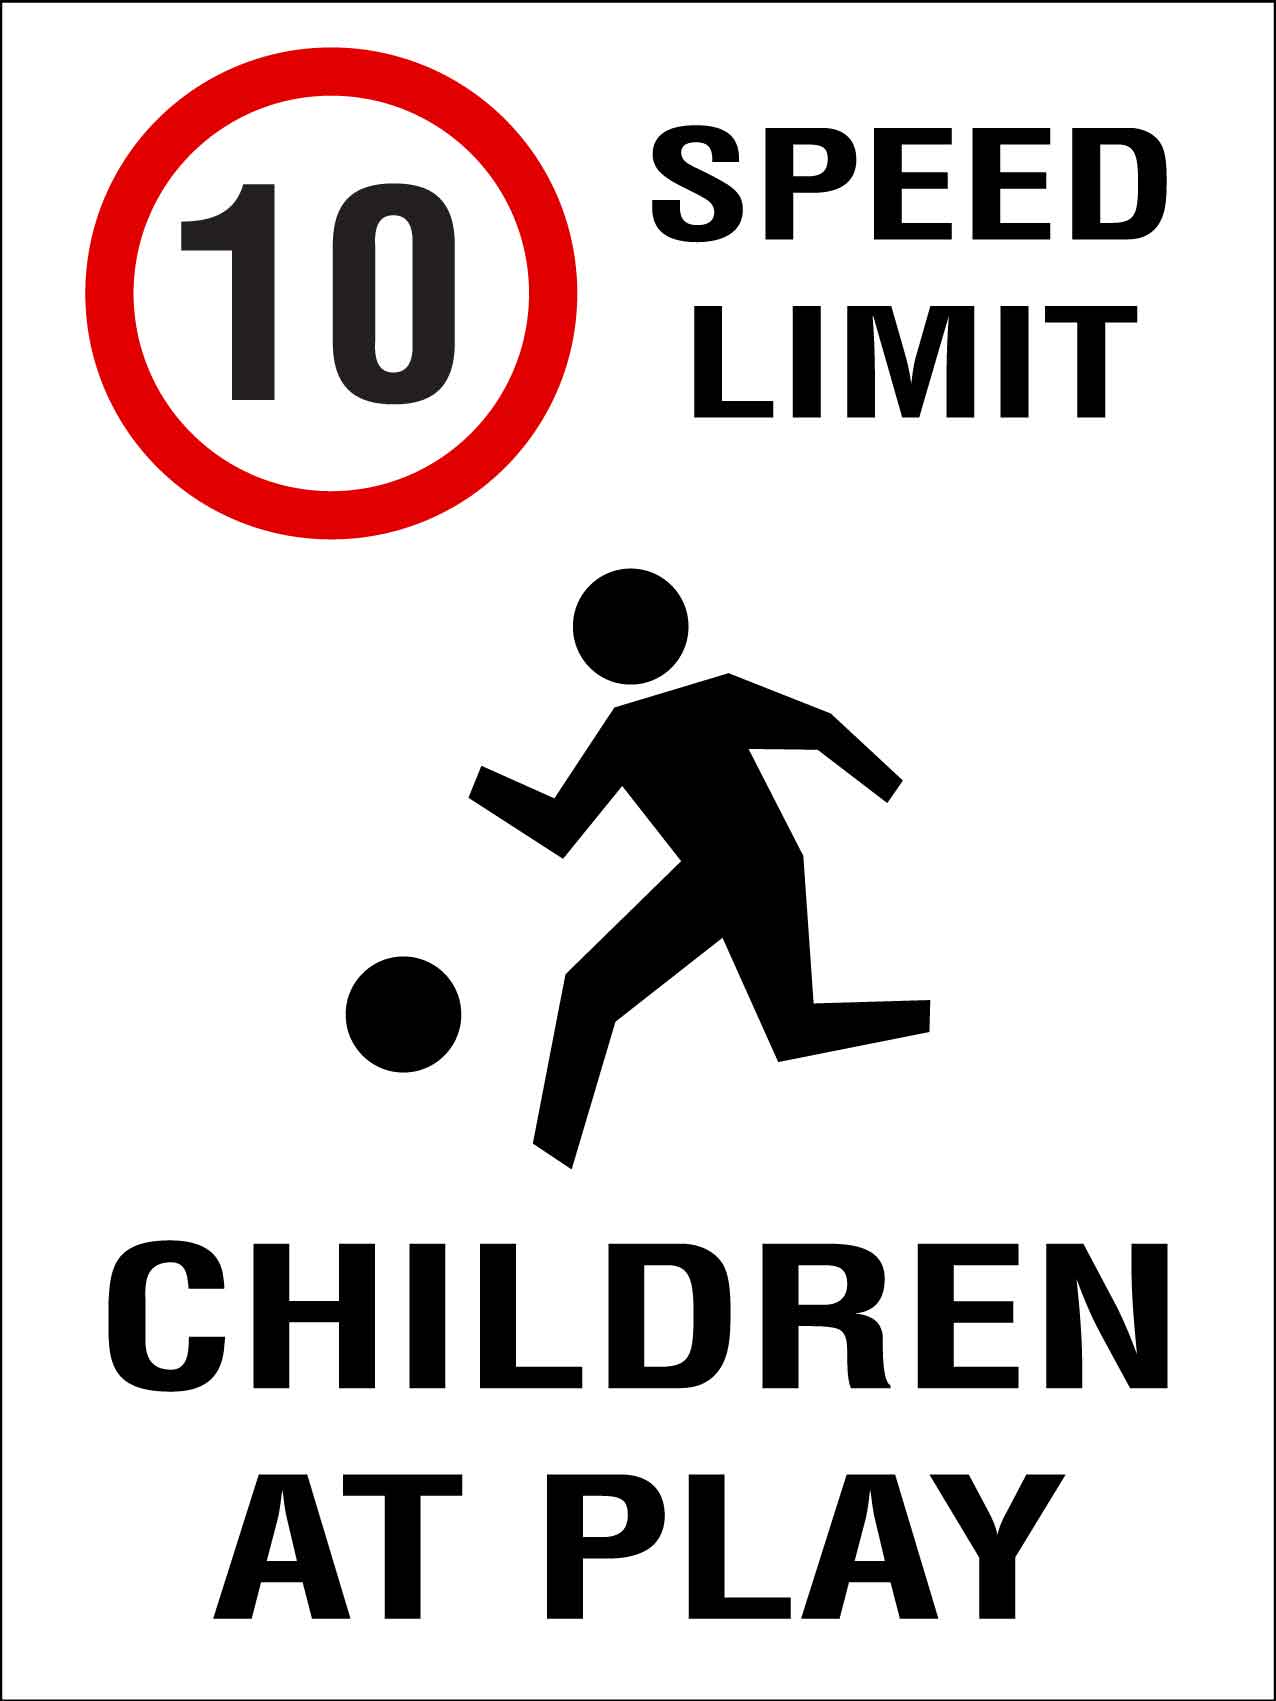 10km Speed Limit Children At Play Sign